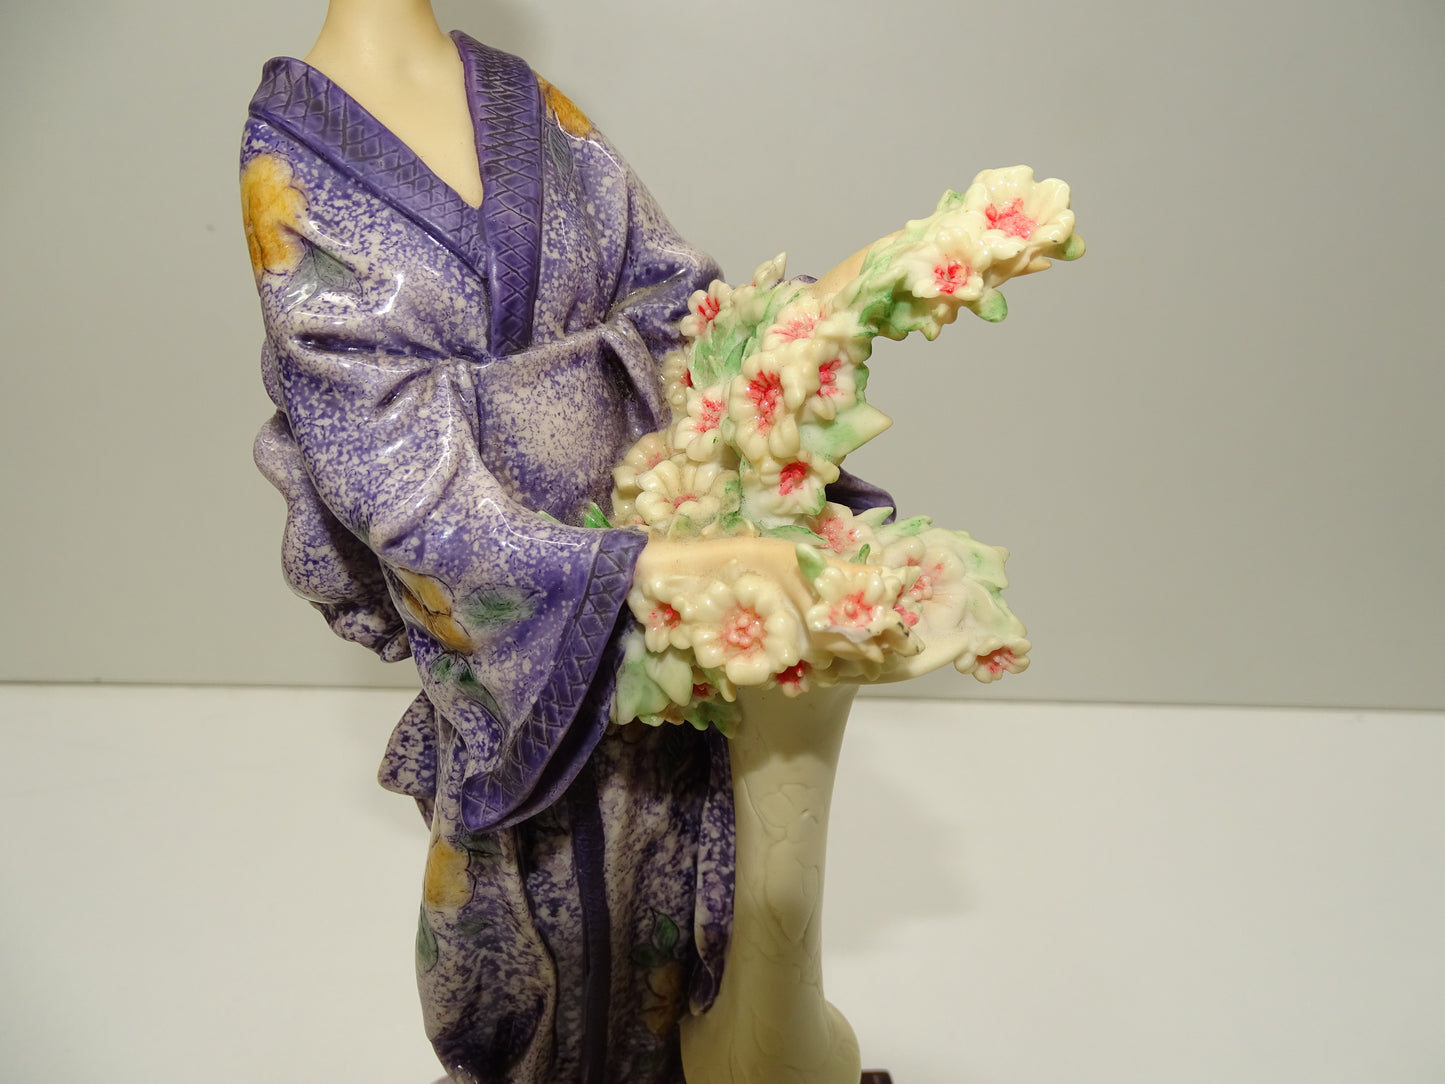 Beeld: Giuseppe Armani, Japanse Geisha met Bloemen, Jaren '80